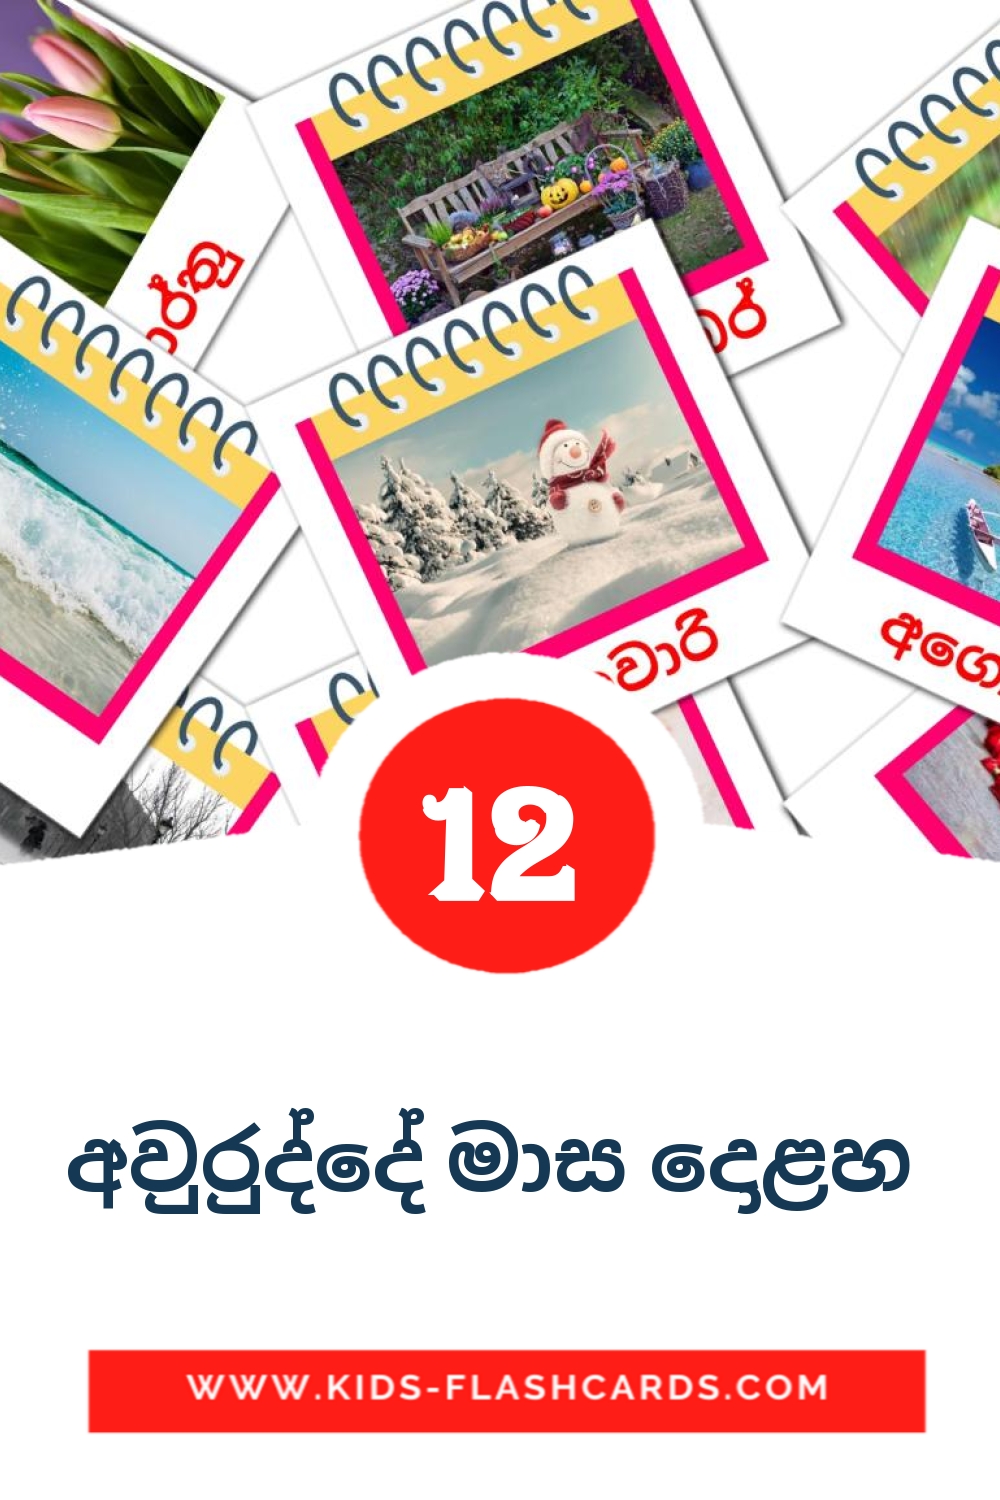 12 carte illustrate di අවුරුද්දේ මාස දොළහ  per la scuola materna in singalese